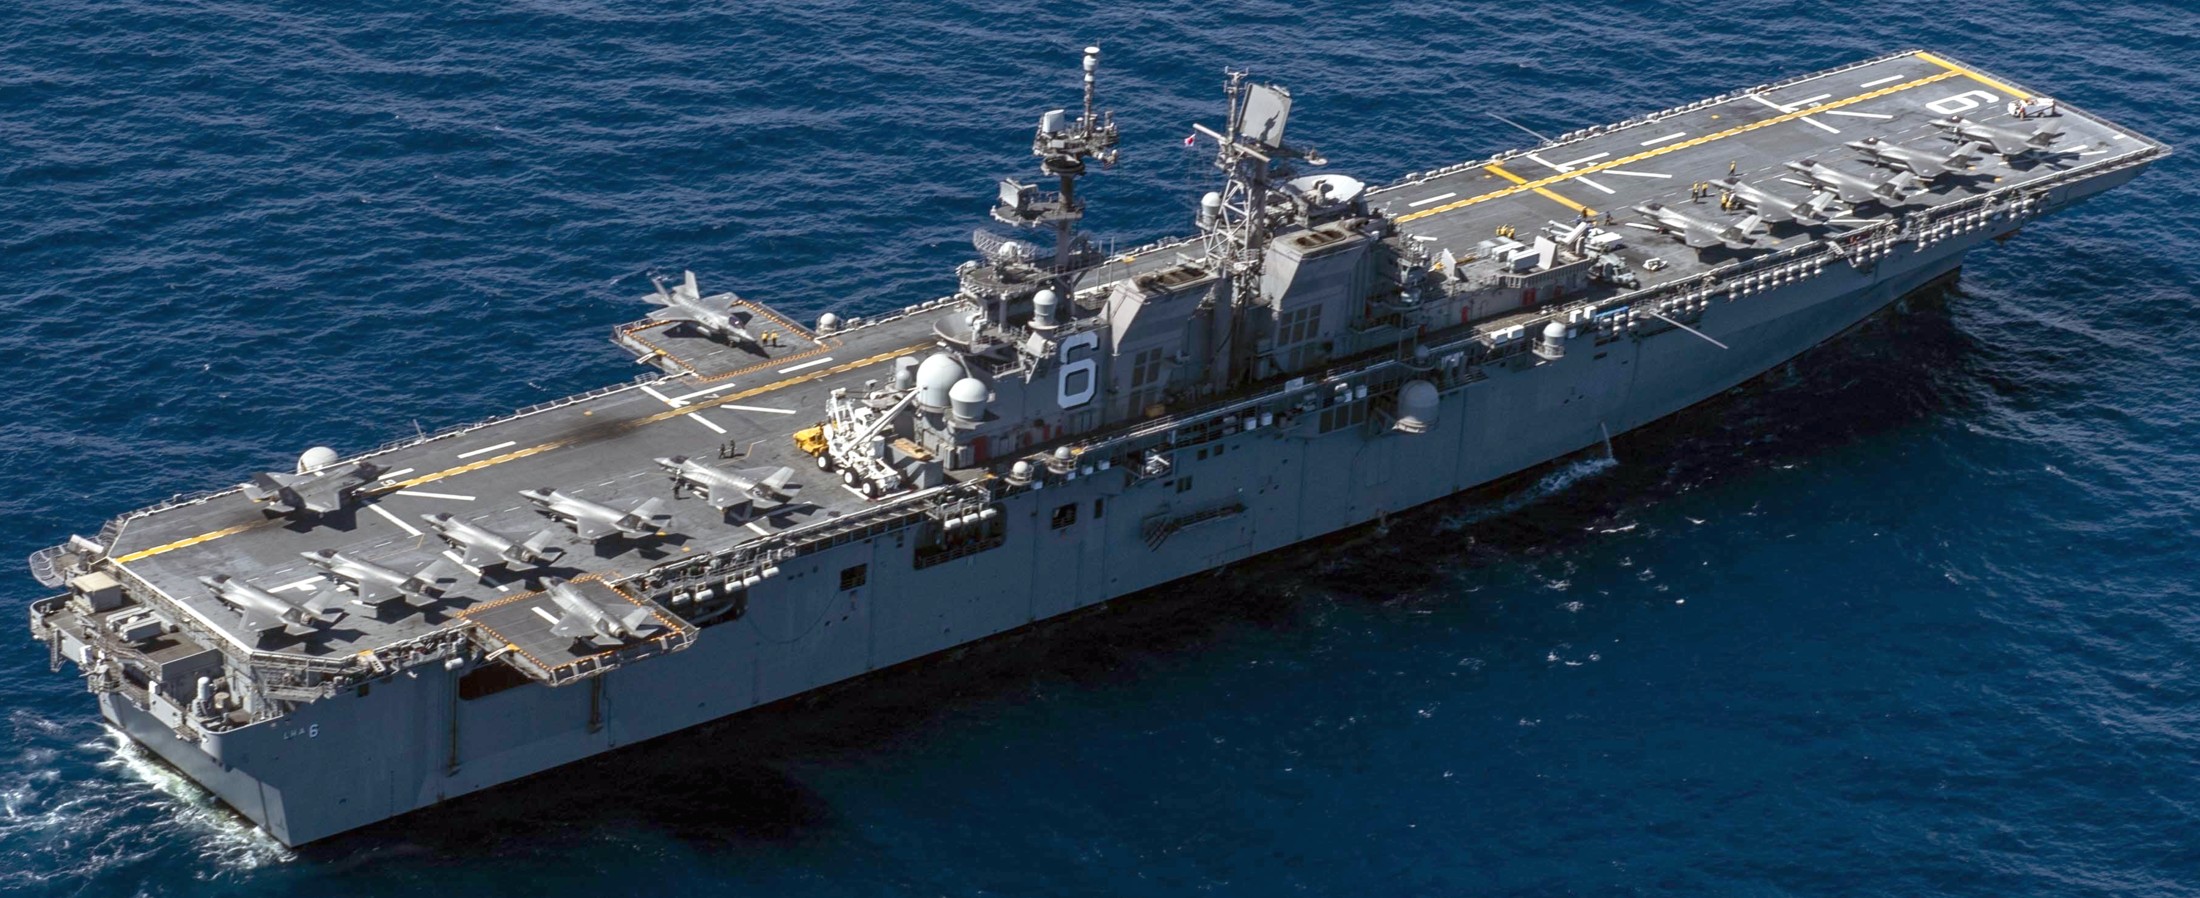 lha-6 uss america amphibious assault ship us navy 05